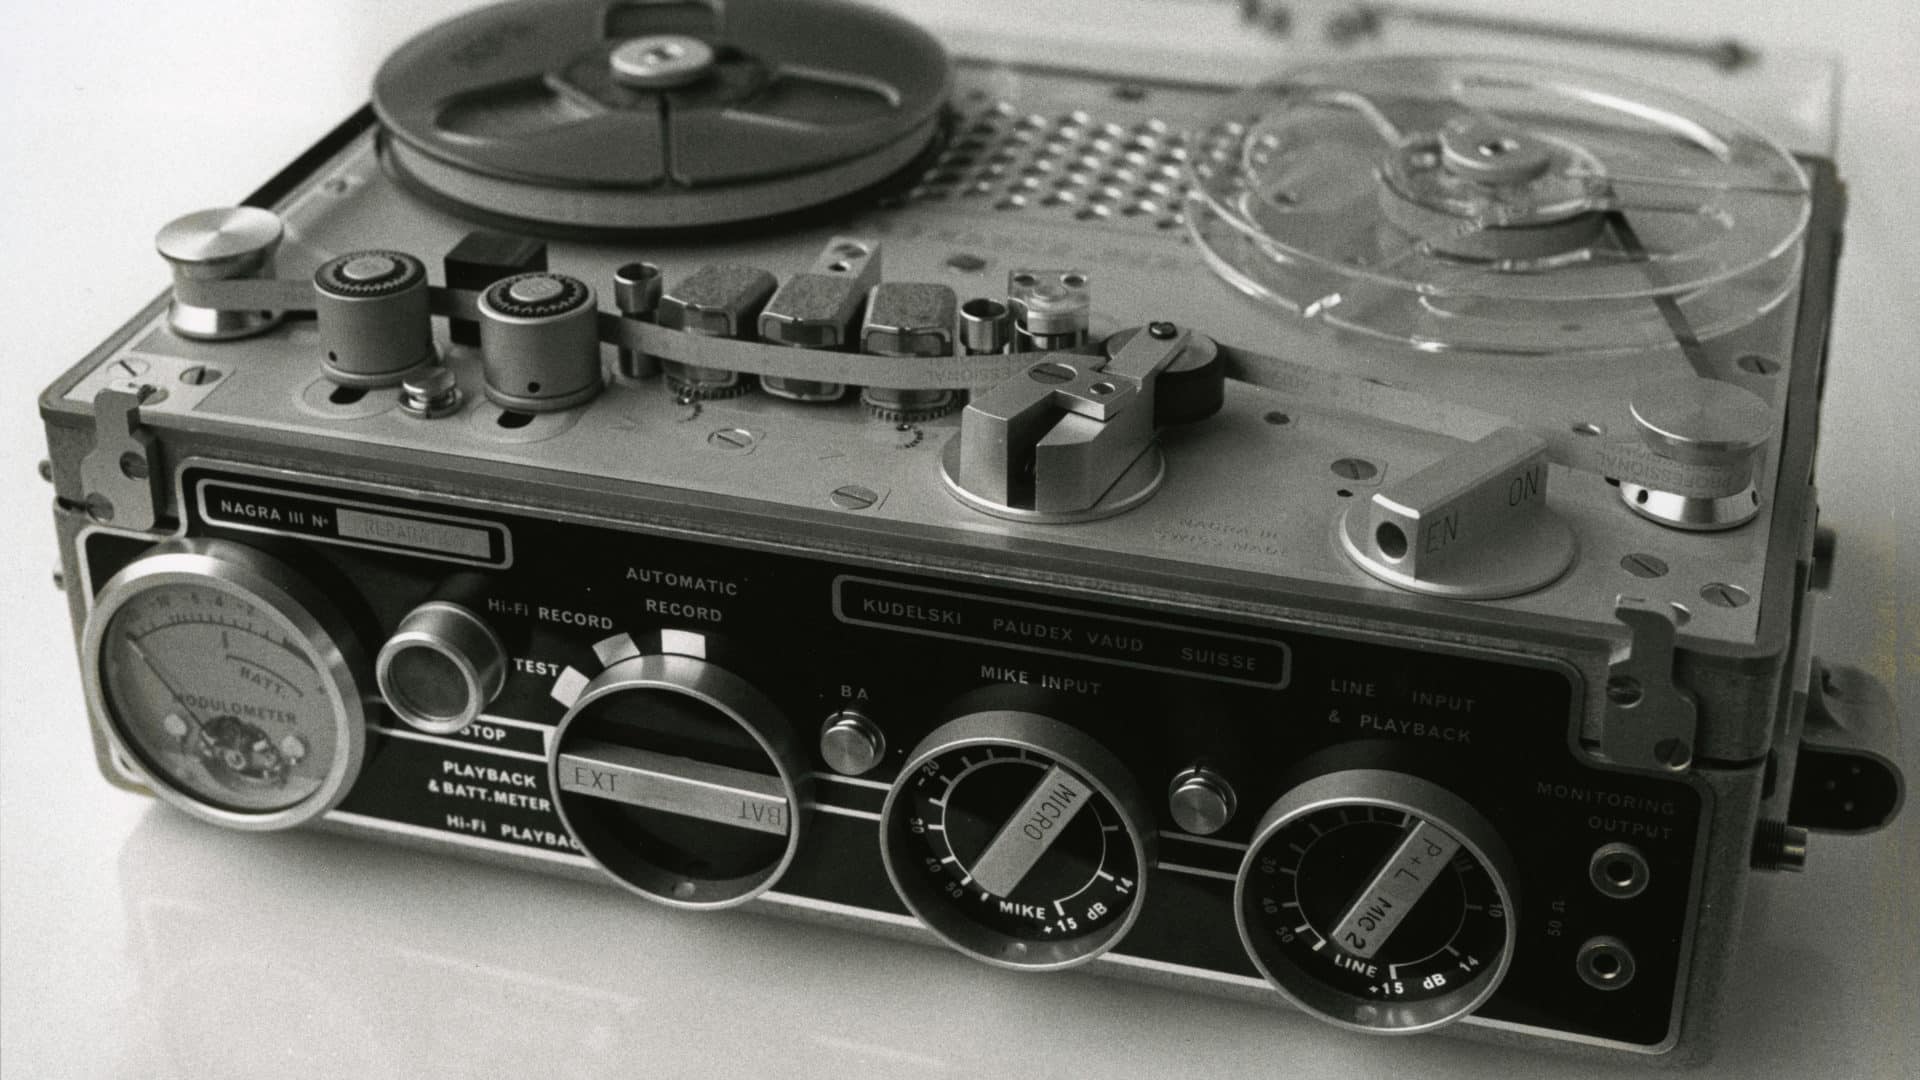 Kudelski Nagra III Reel to Reel Tape Recorder